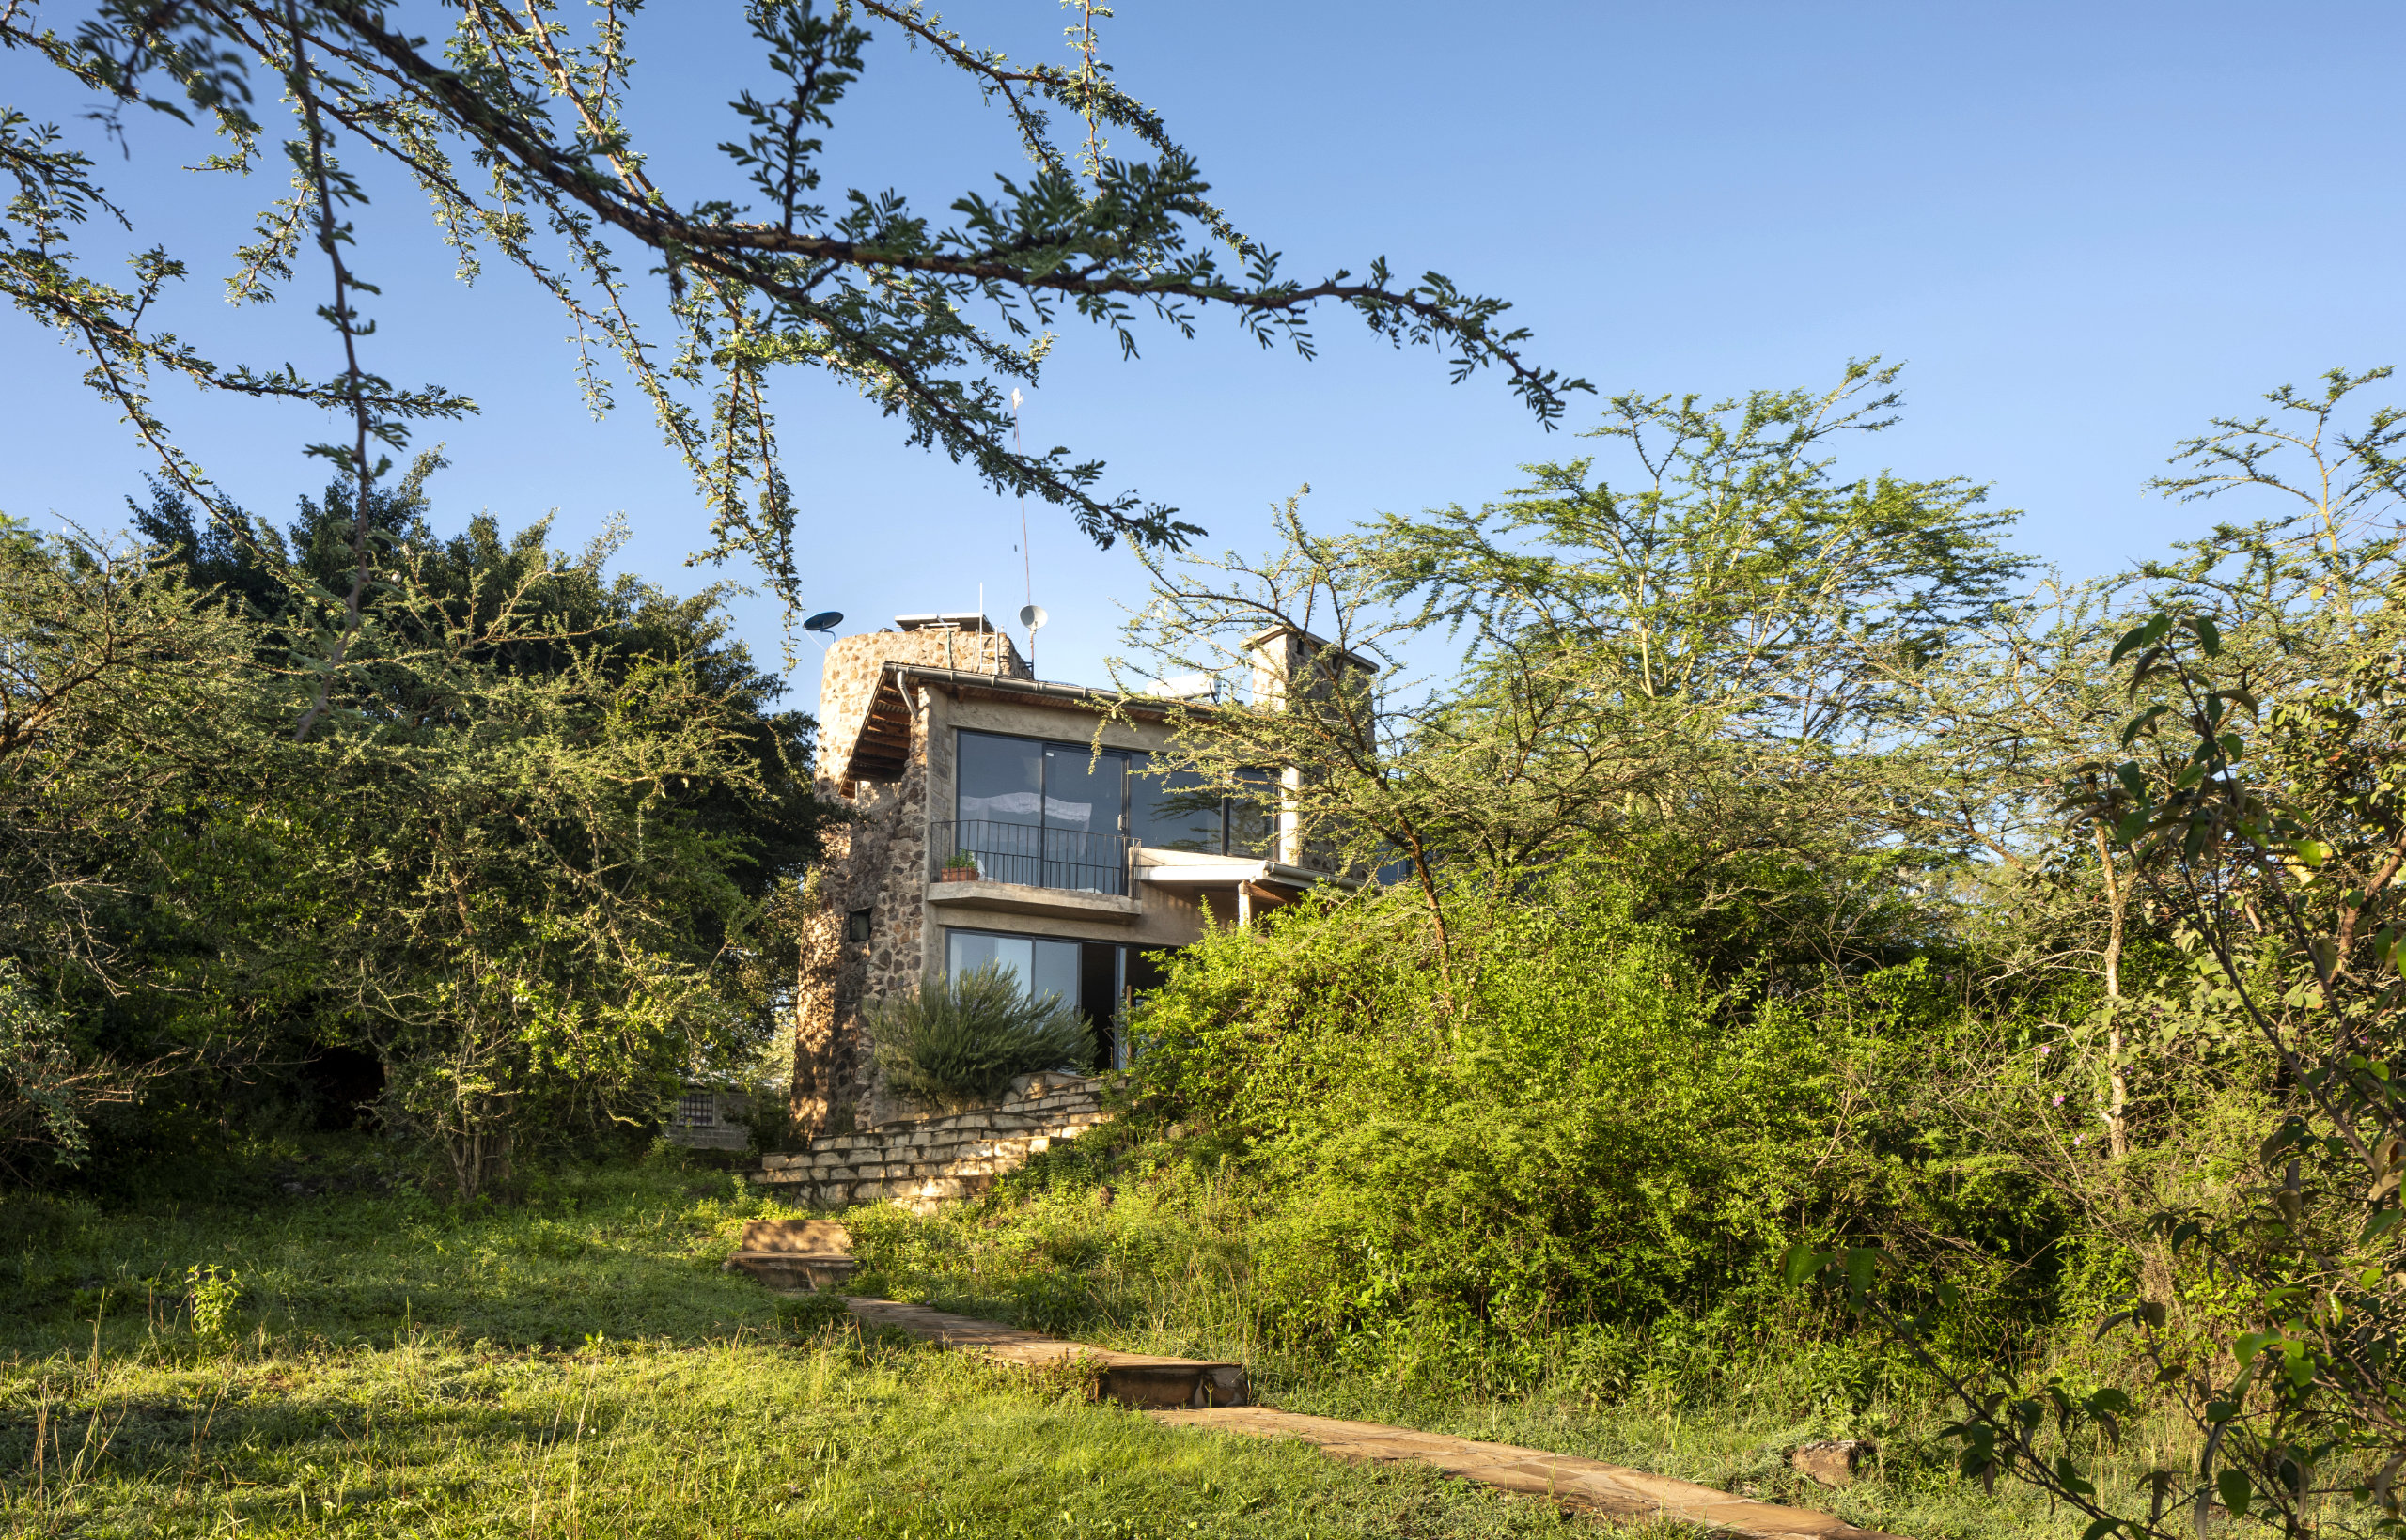 House near Kitengala, Kenya